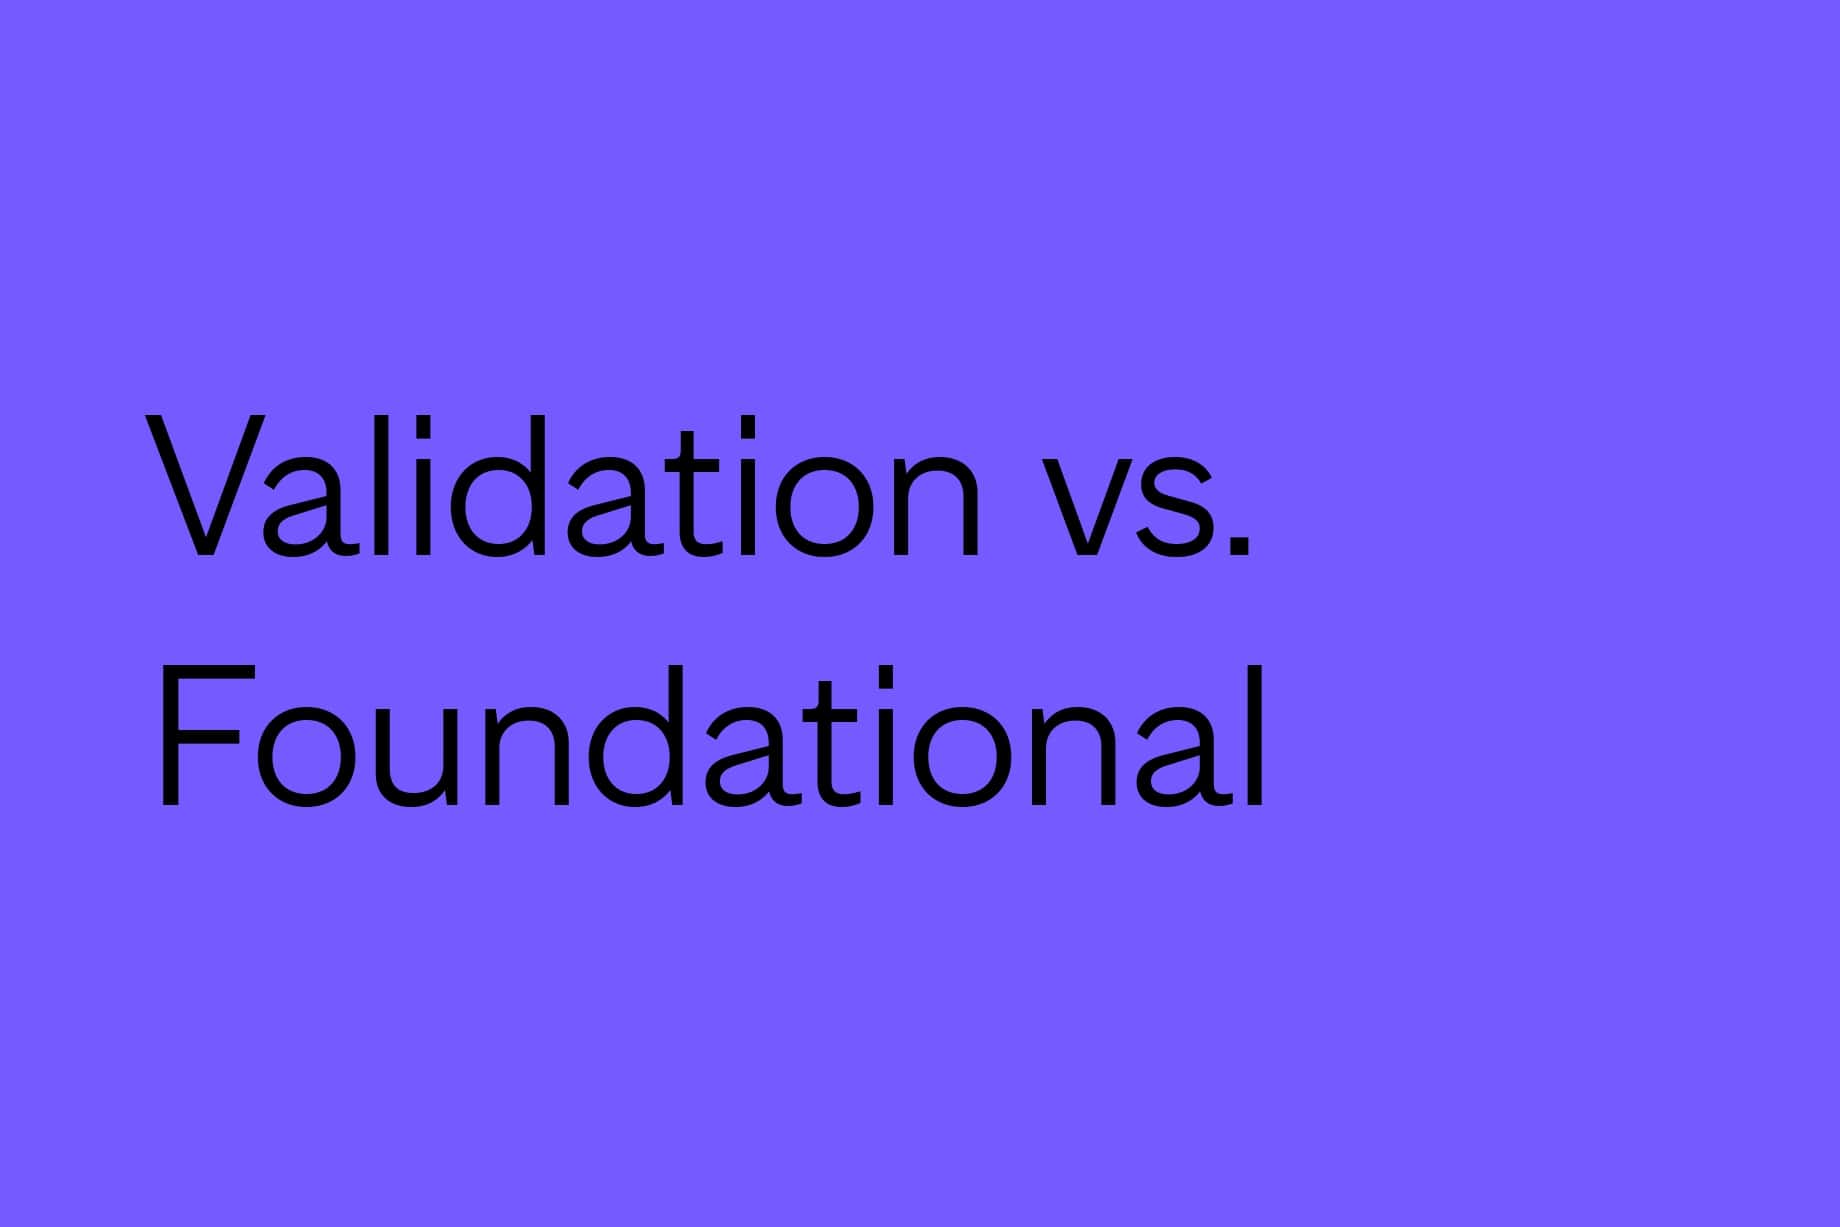 Customer Segmentation Validation vs Foundational